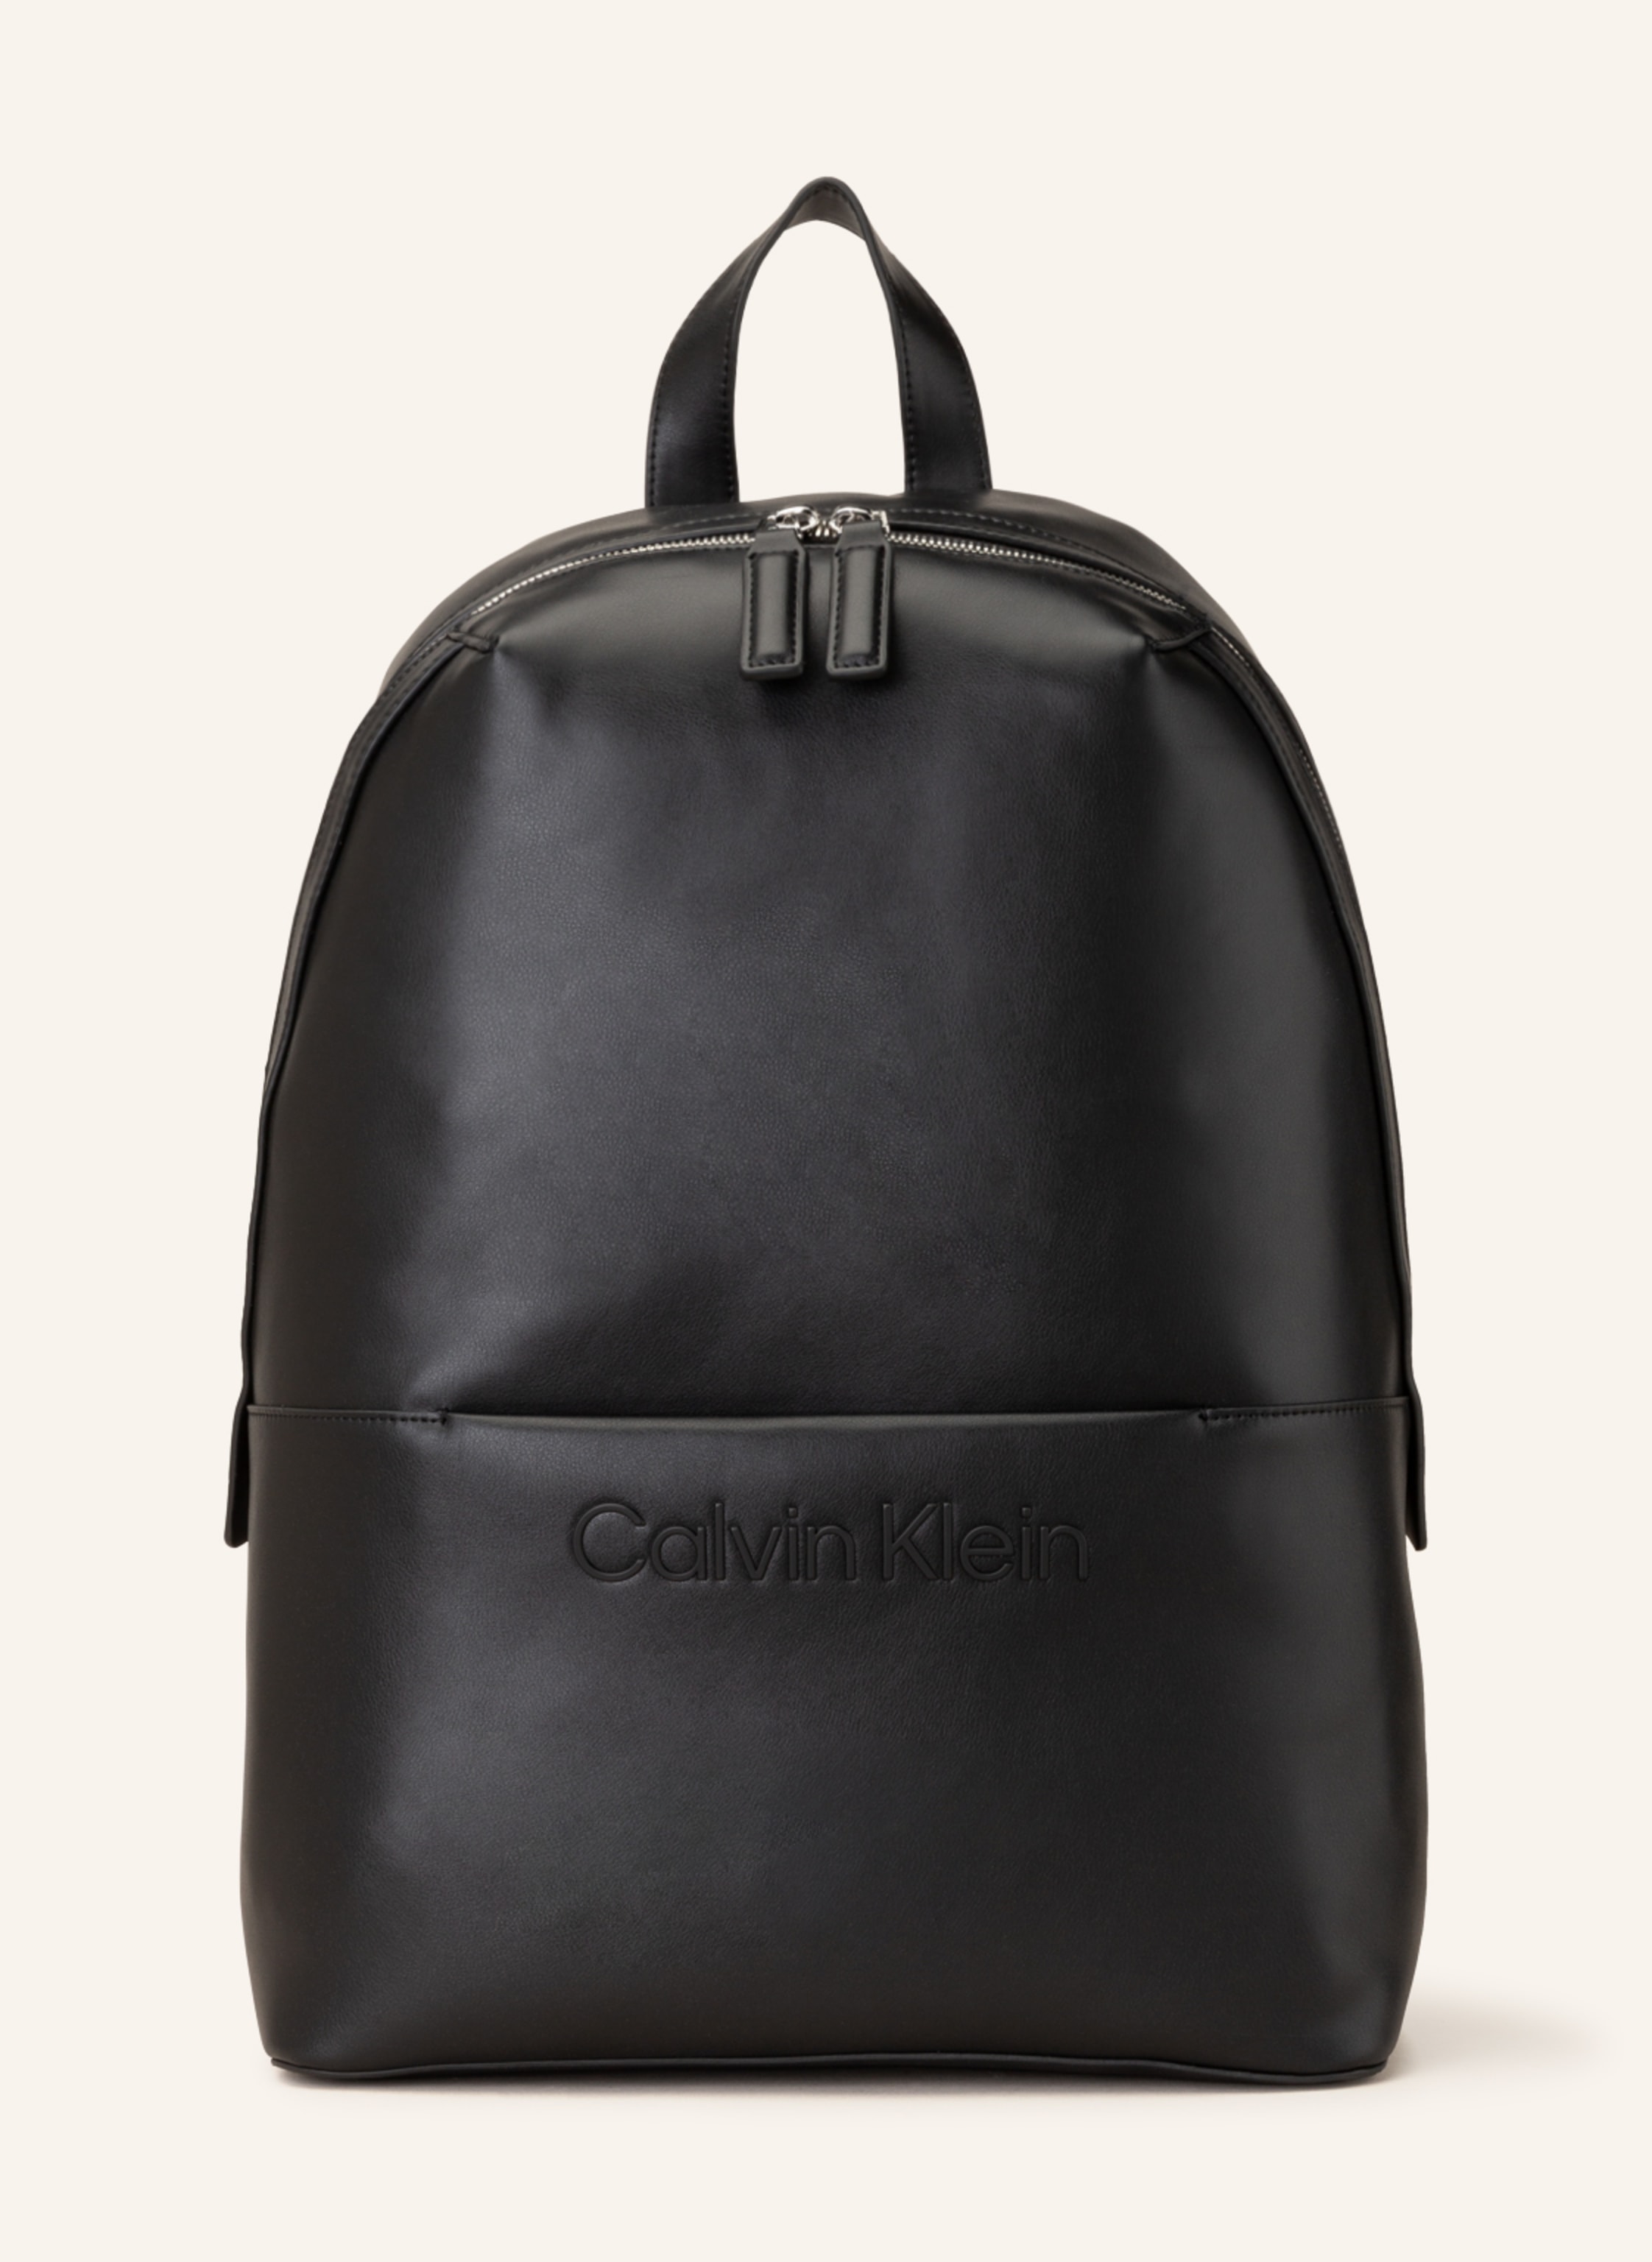 Vervagen Onleesbaar steeg Calvin Klein Backpack with laptop compartment in black | Breuninger